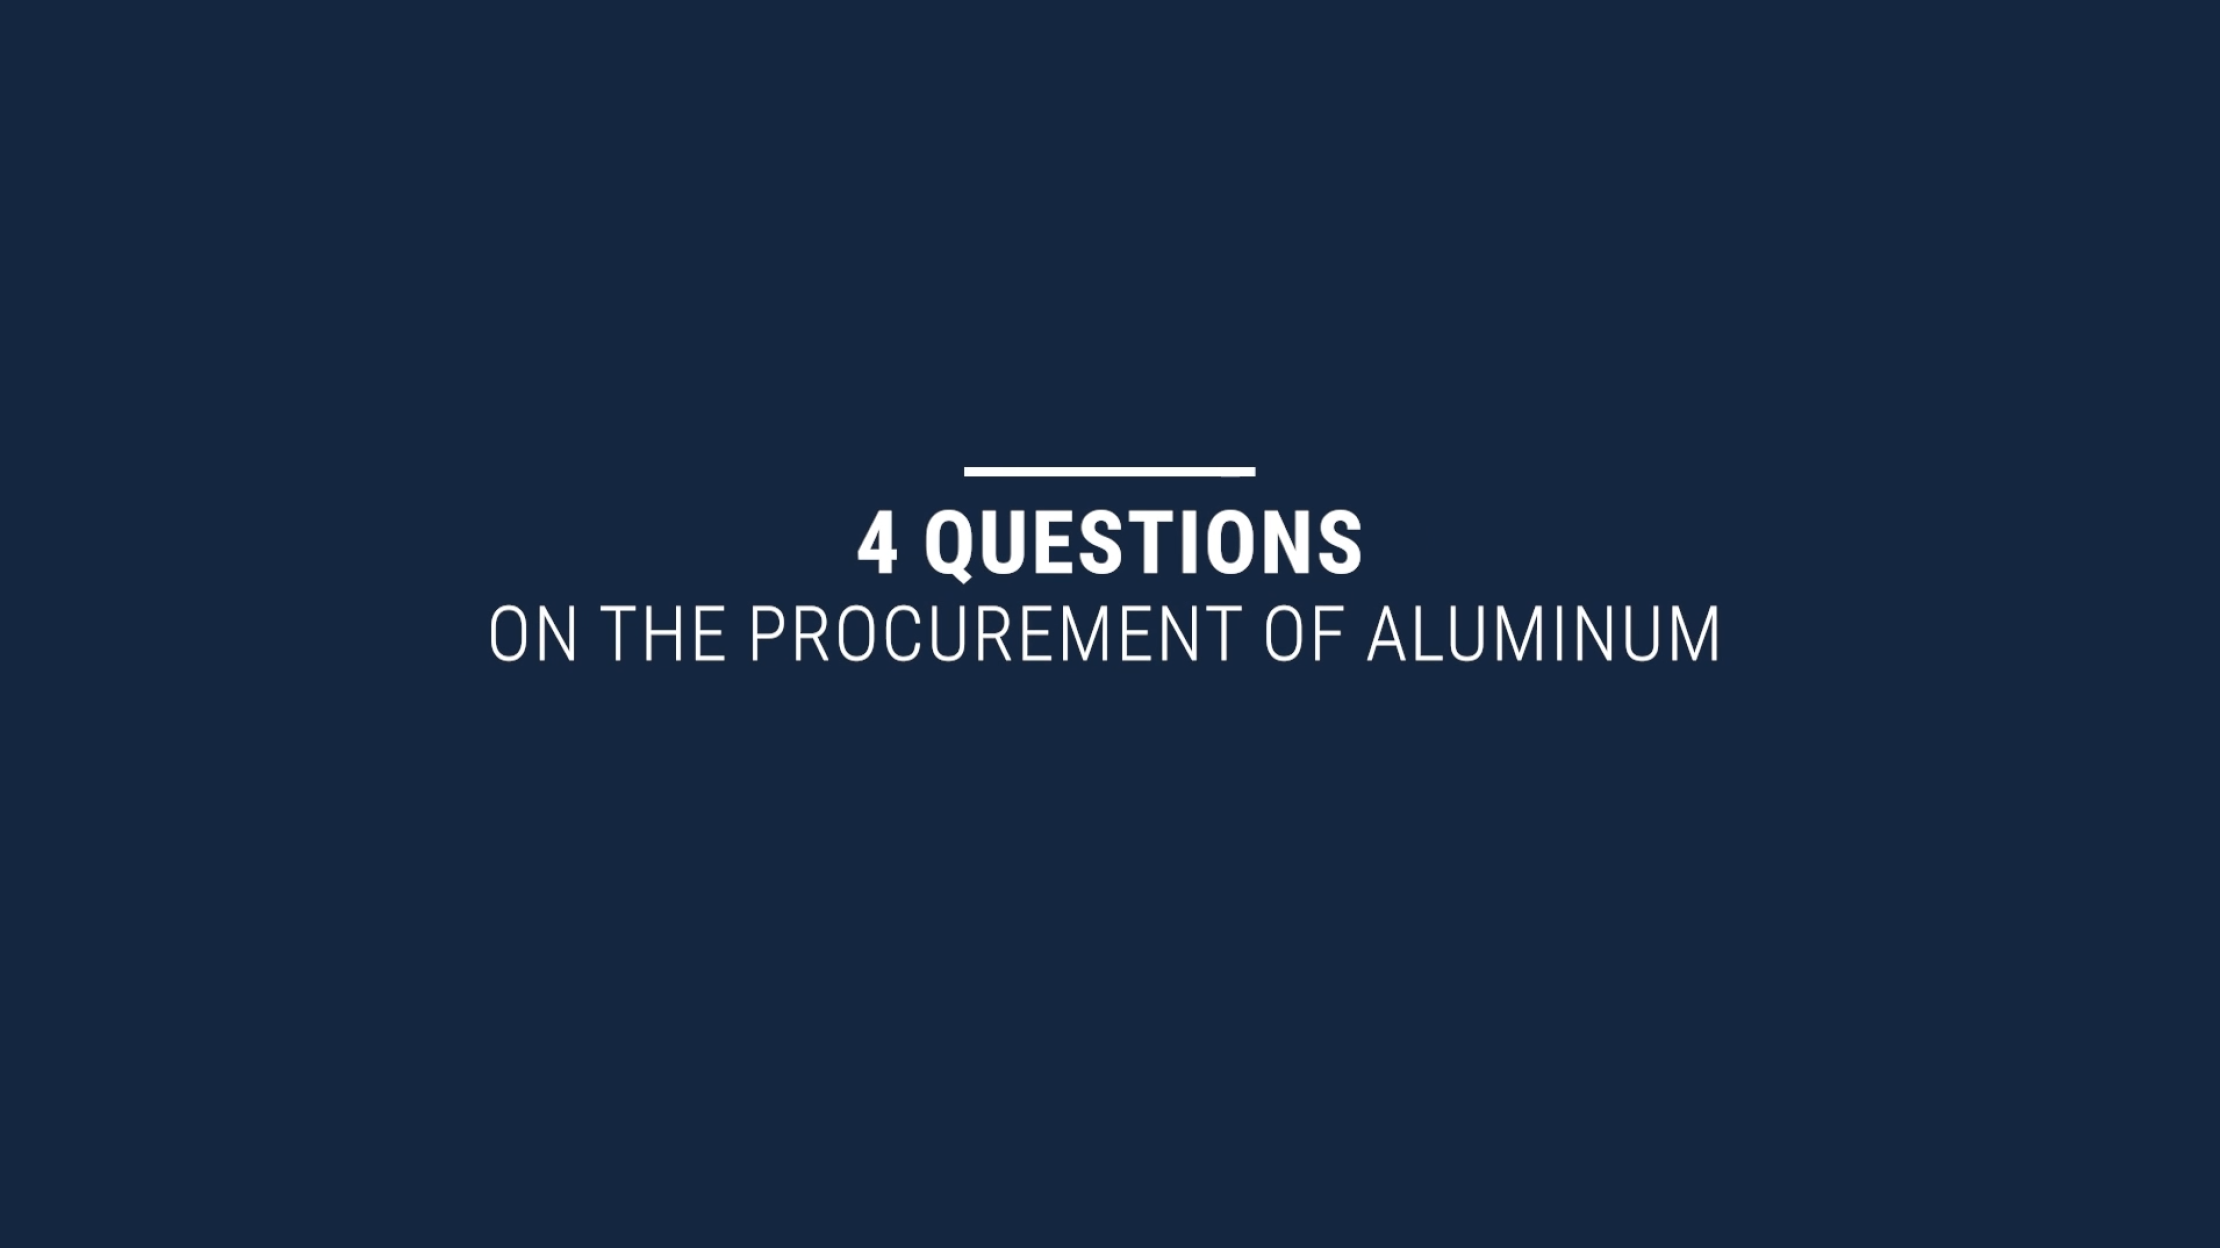 Four questions on the procurement of aluminum